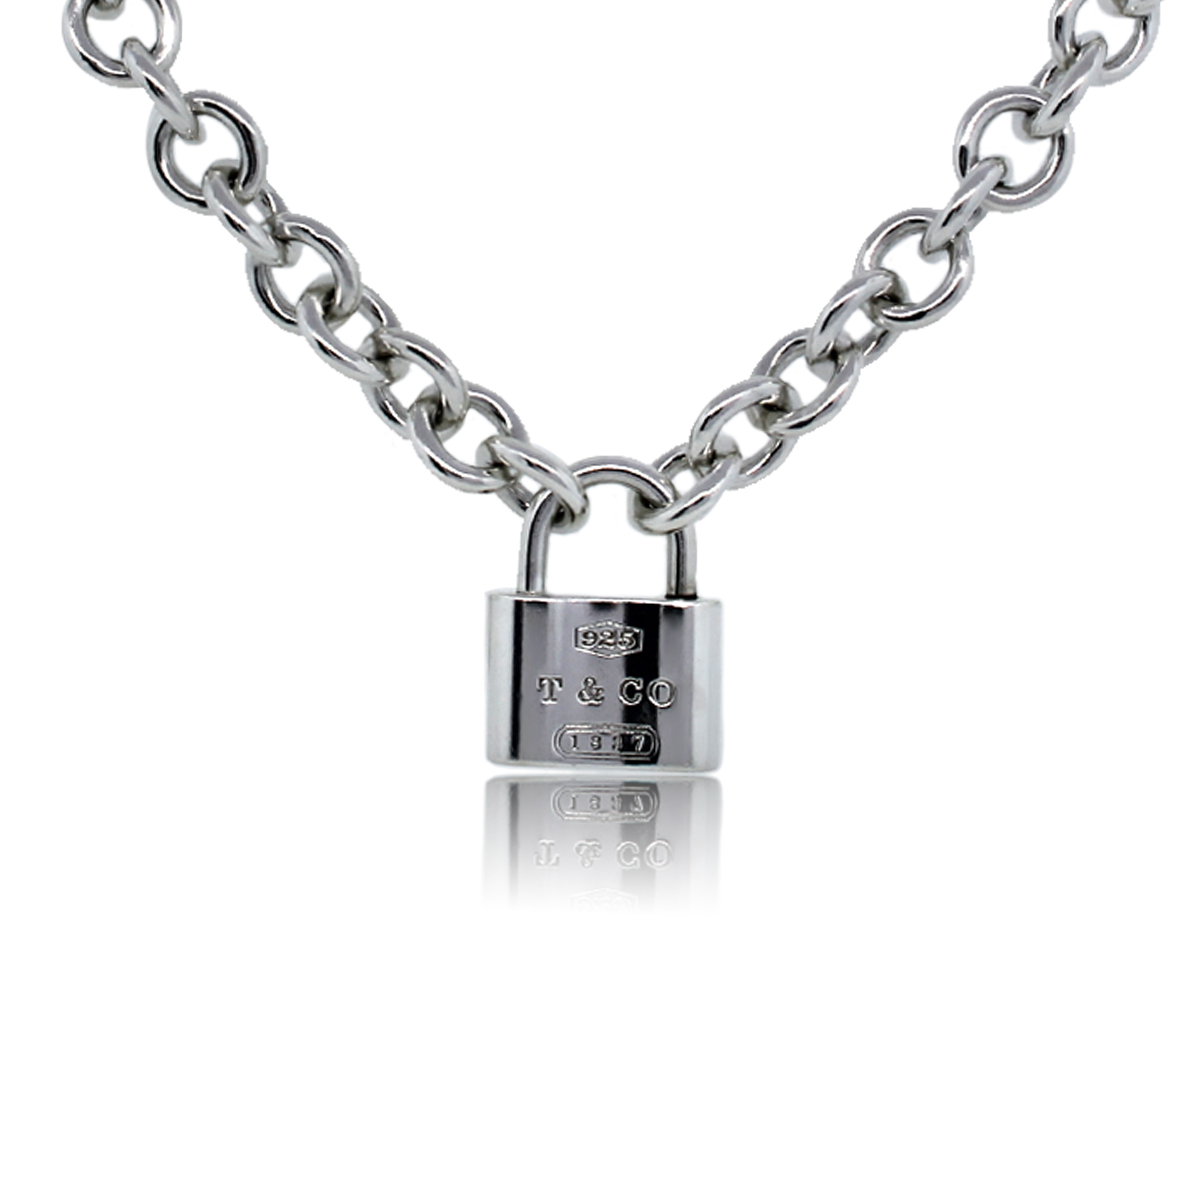 tiffany 1837 lock necklace